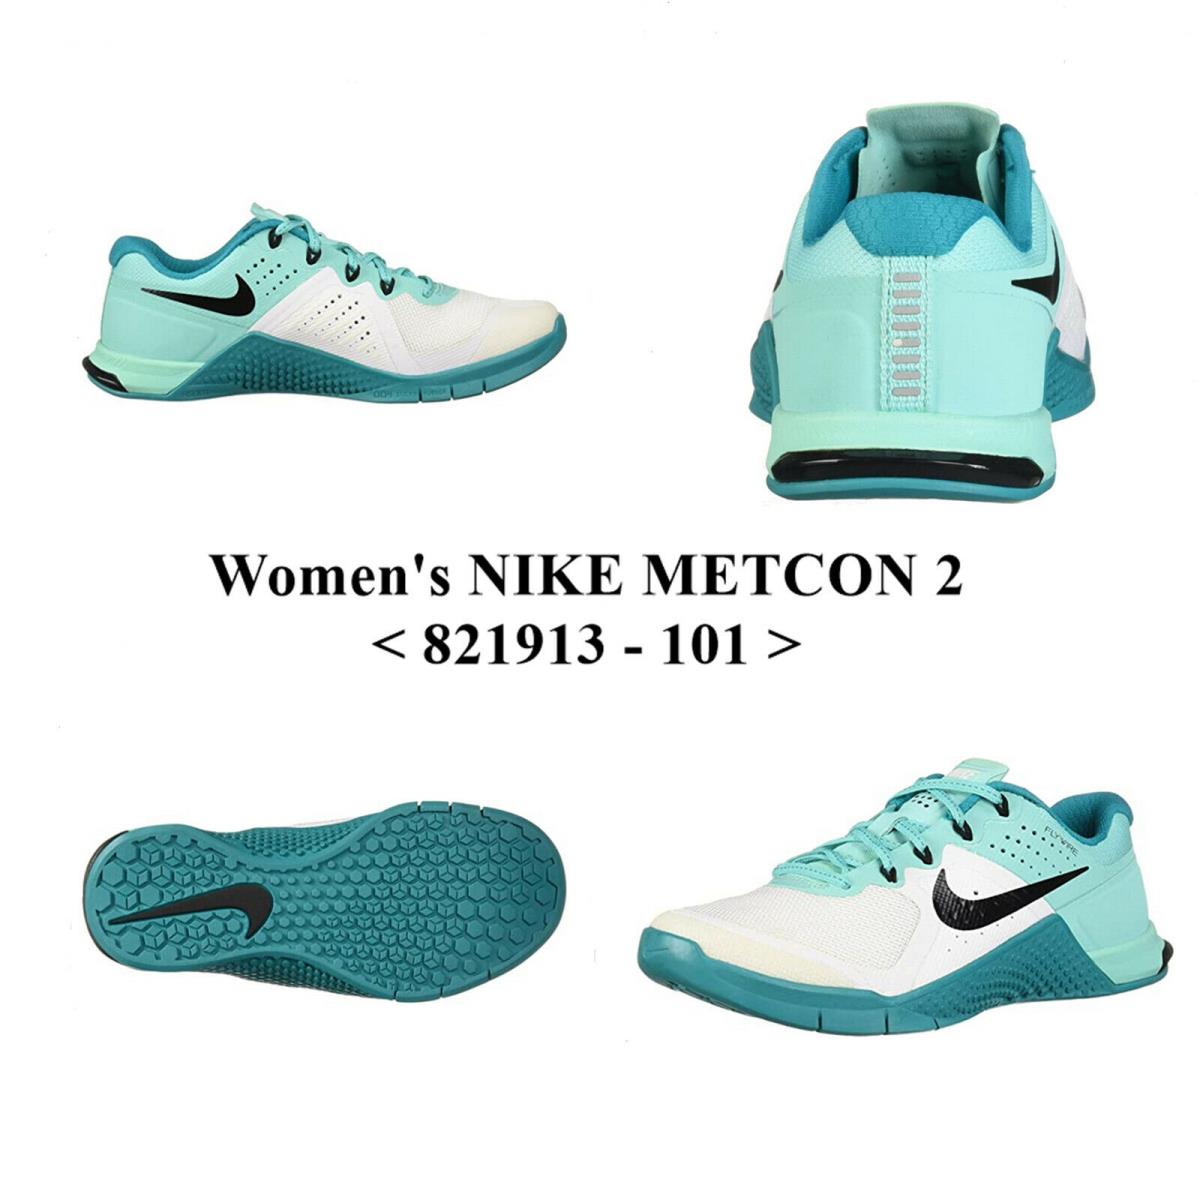 Women`s Nike Metcon 2 821913 - 101 Training Shoes.new - WHITE / BLACK-HYPER TURQ-ENERGY